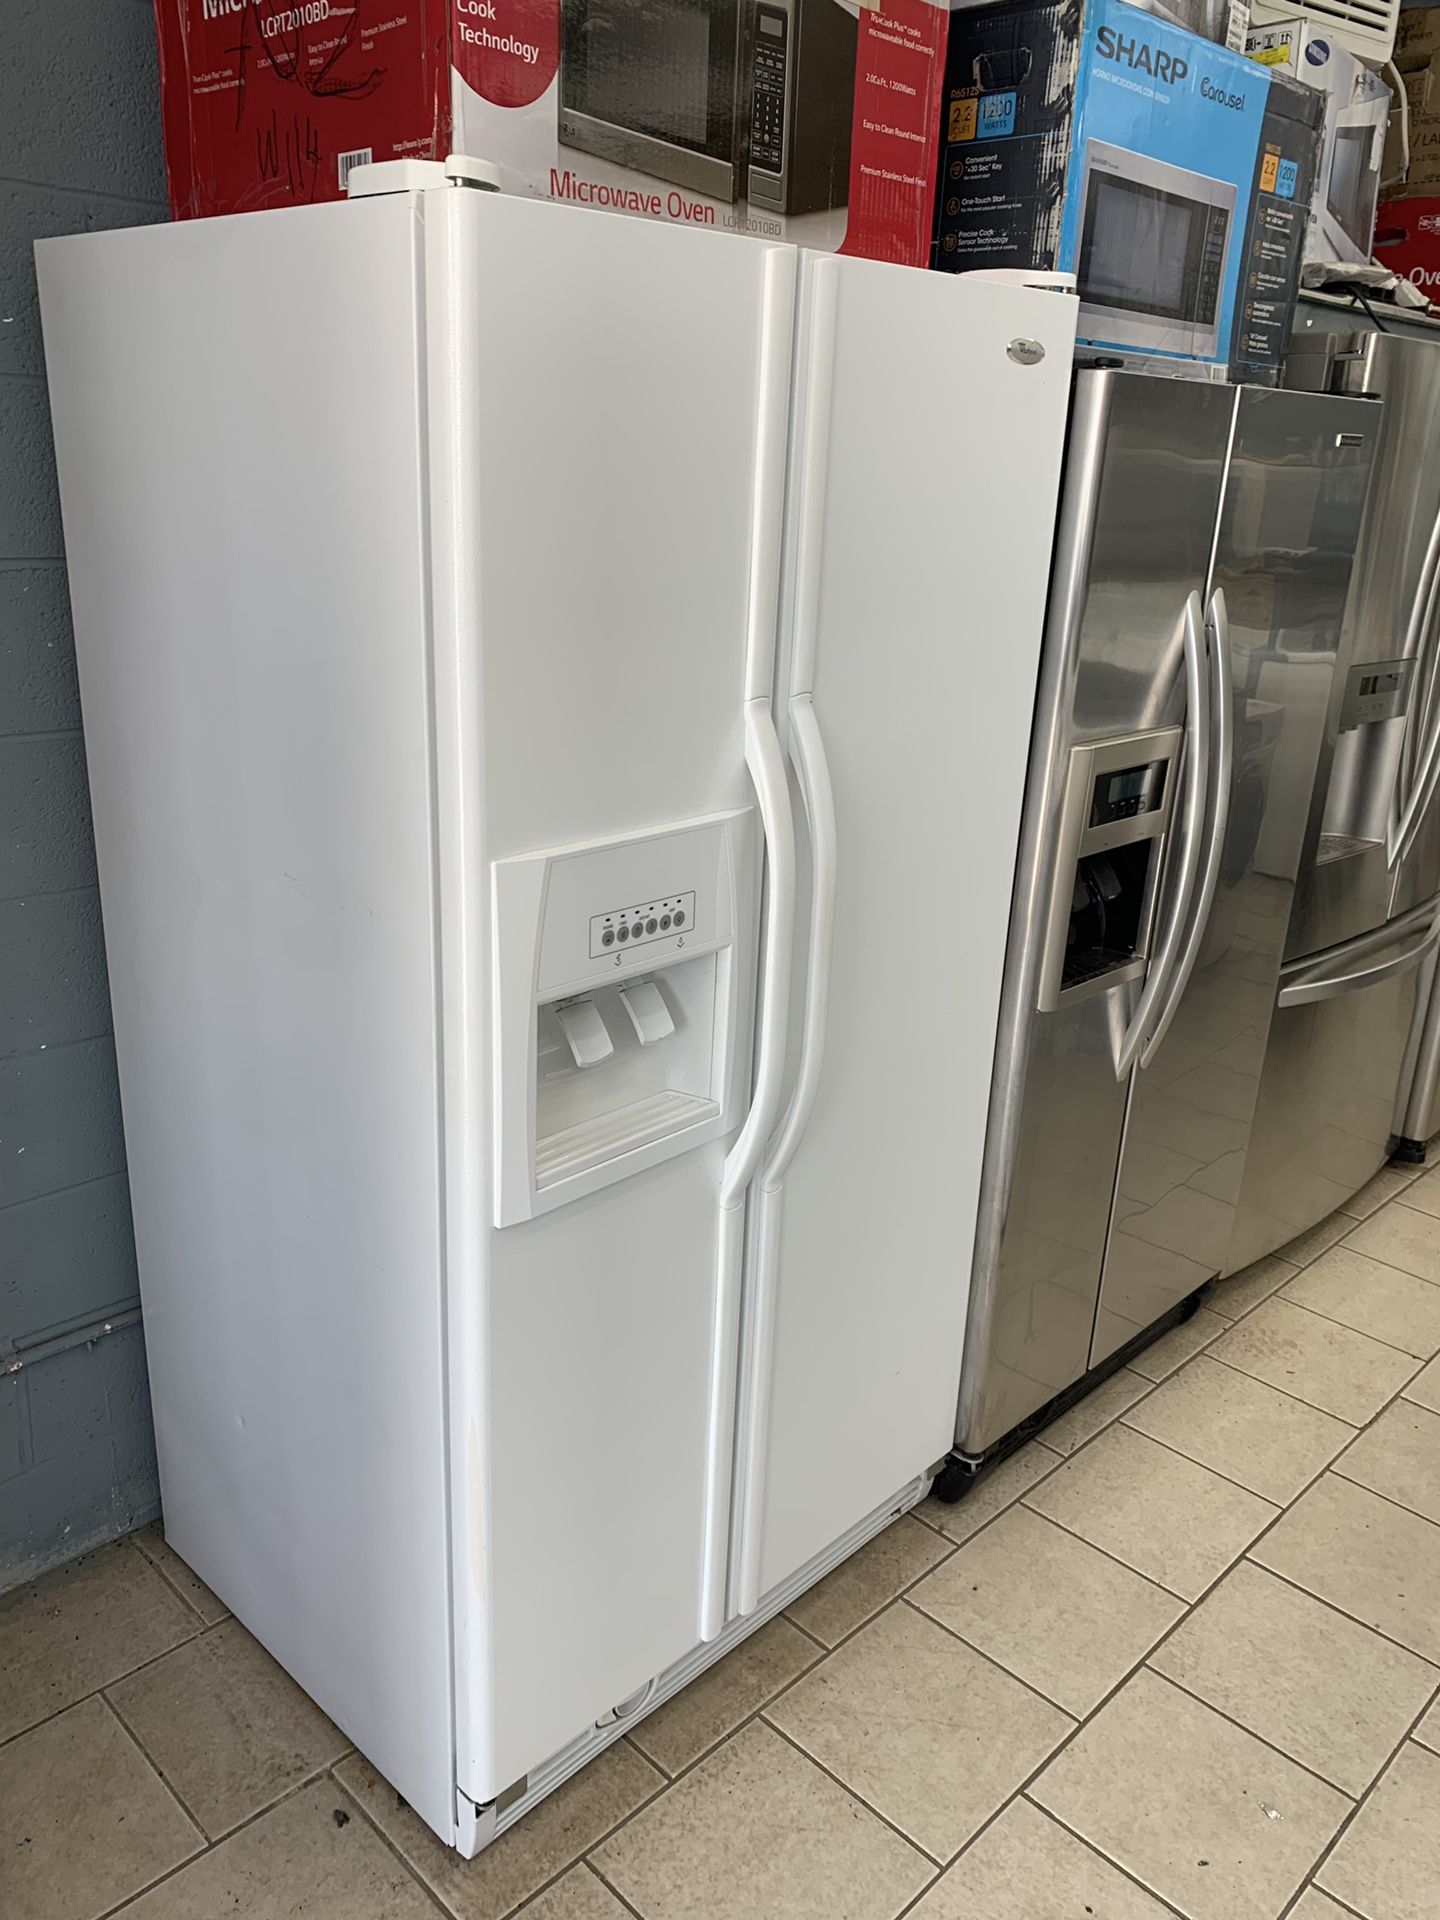 Whirlpool side by side refrigerator